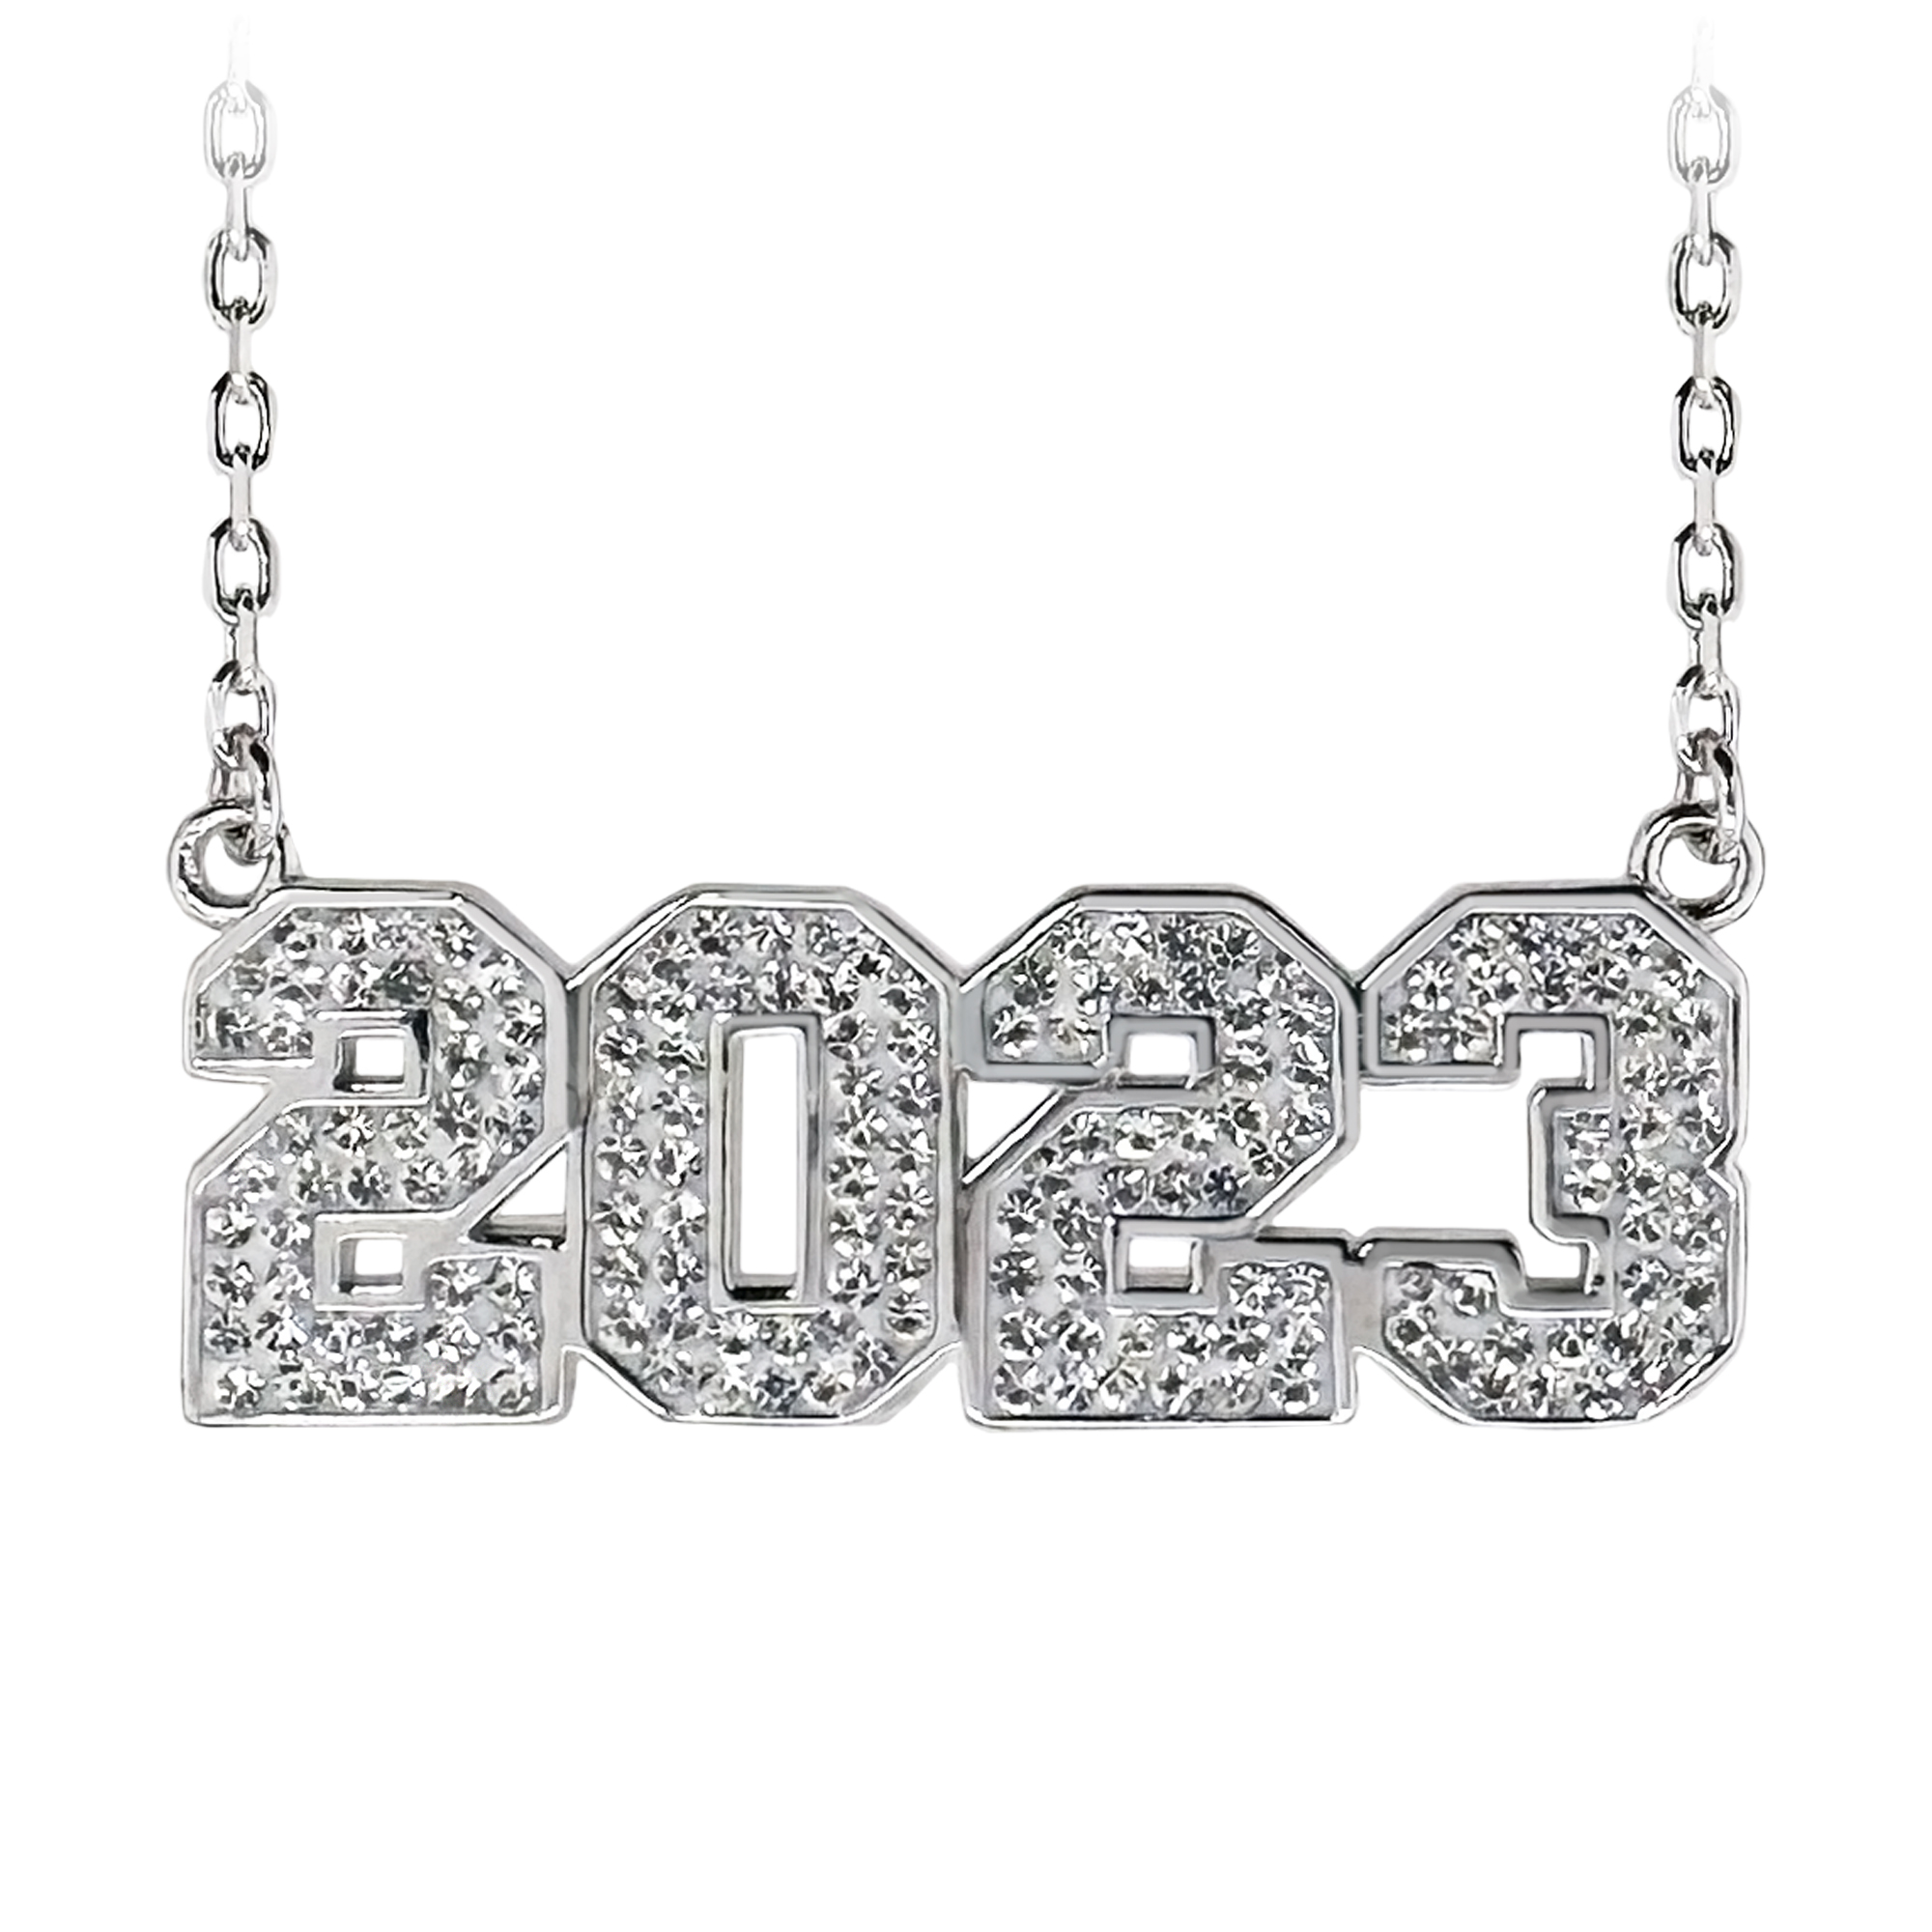 2023 Pave Crystal Sterling Silver Necklace, 16-18" Adj